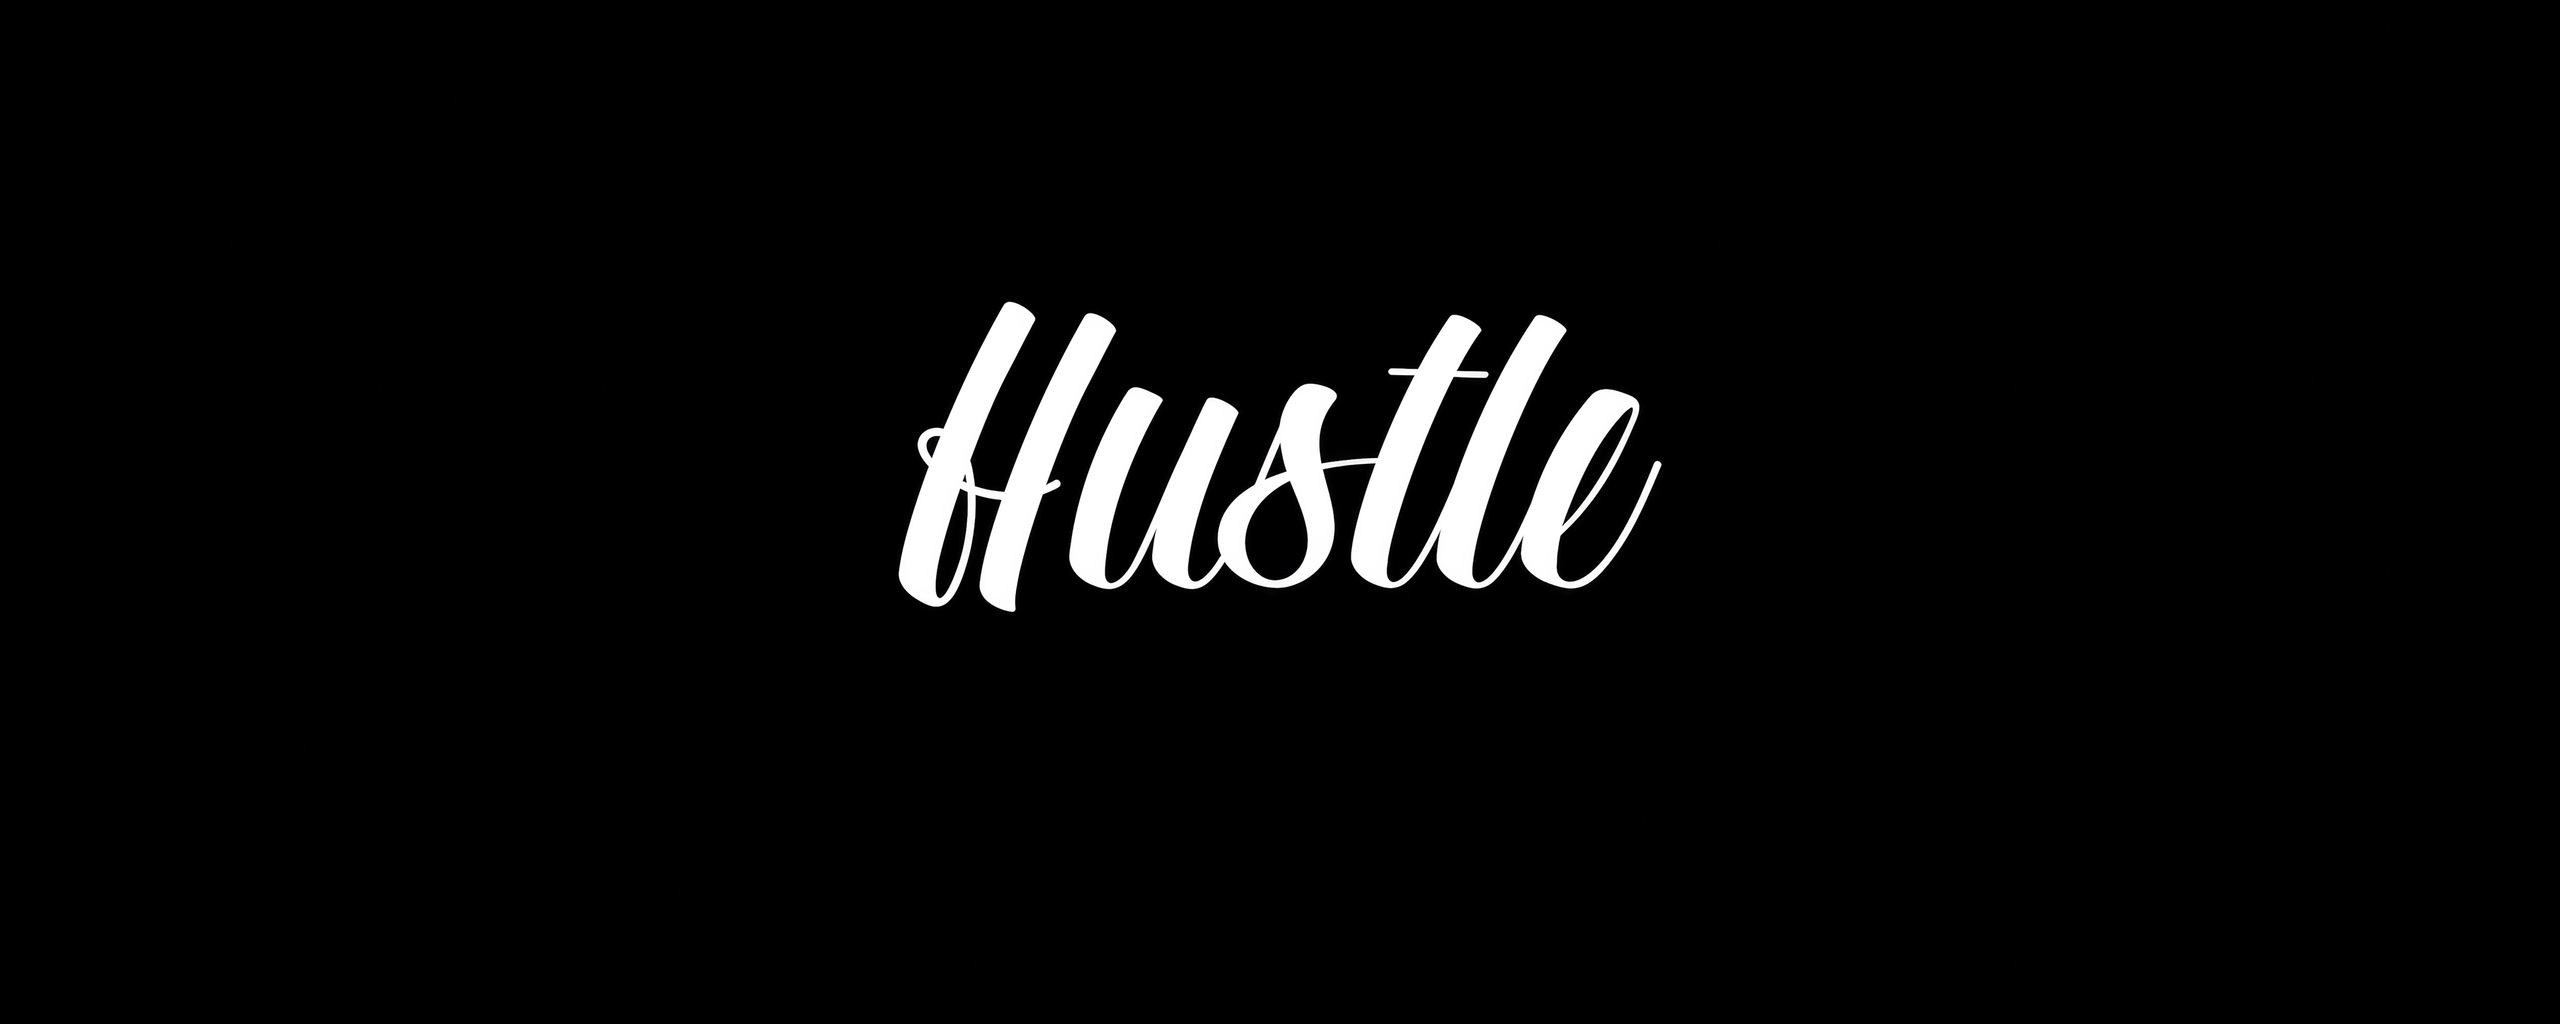 Hustle Motivational Wallpaper In 2560x1024 Resolution